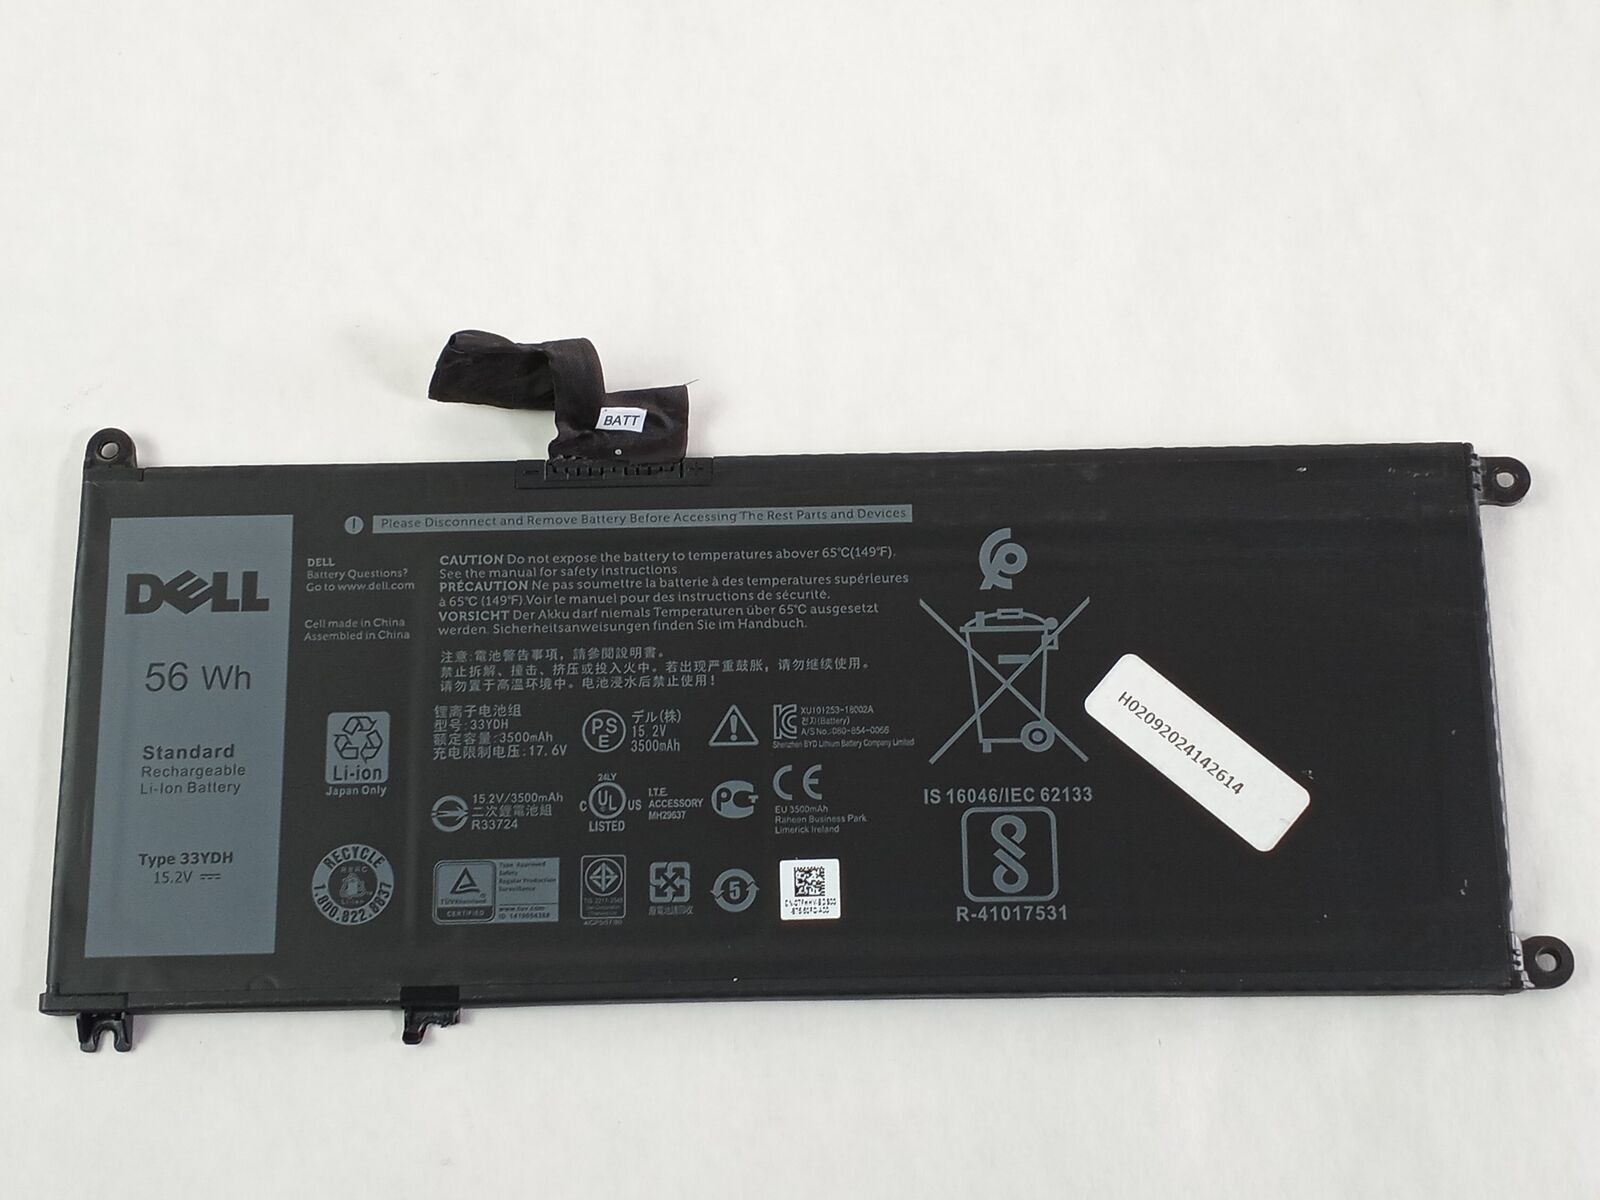 Lot of 10 Dell 33YDH 3500 mAh 15.2 V 4 Cell Laptop Battery for Latitude 3380